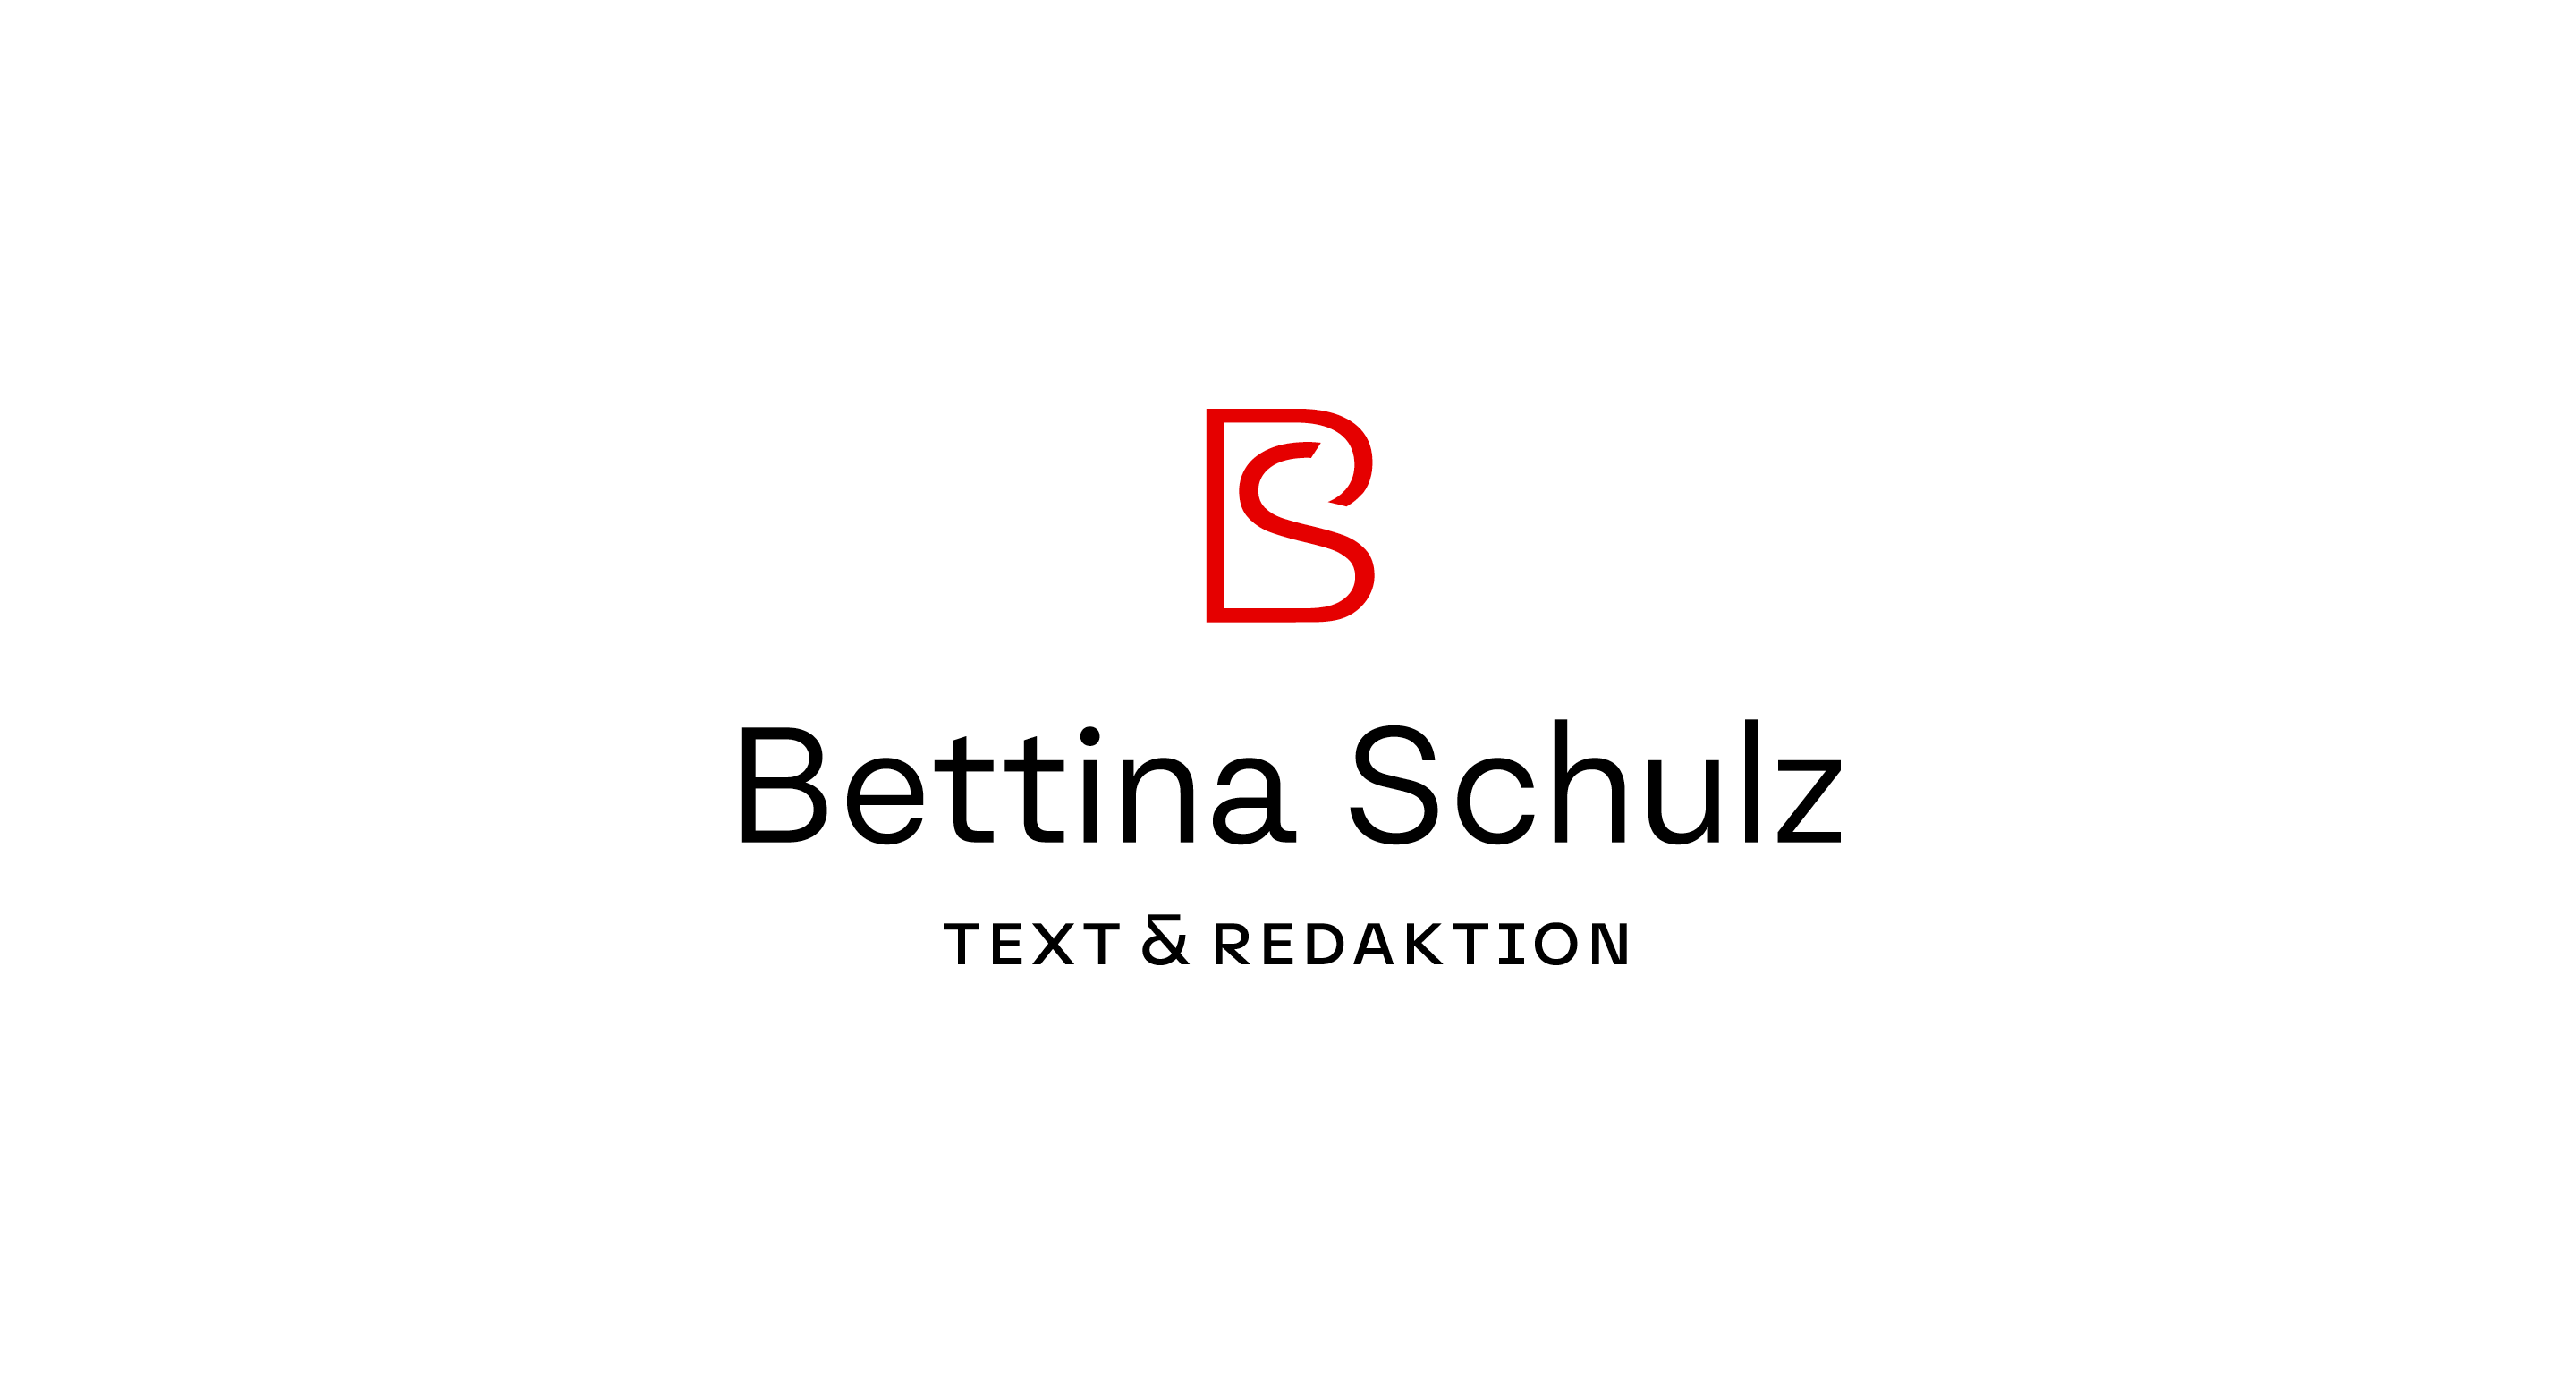 (c) Bettina-schulz.de